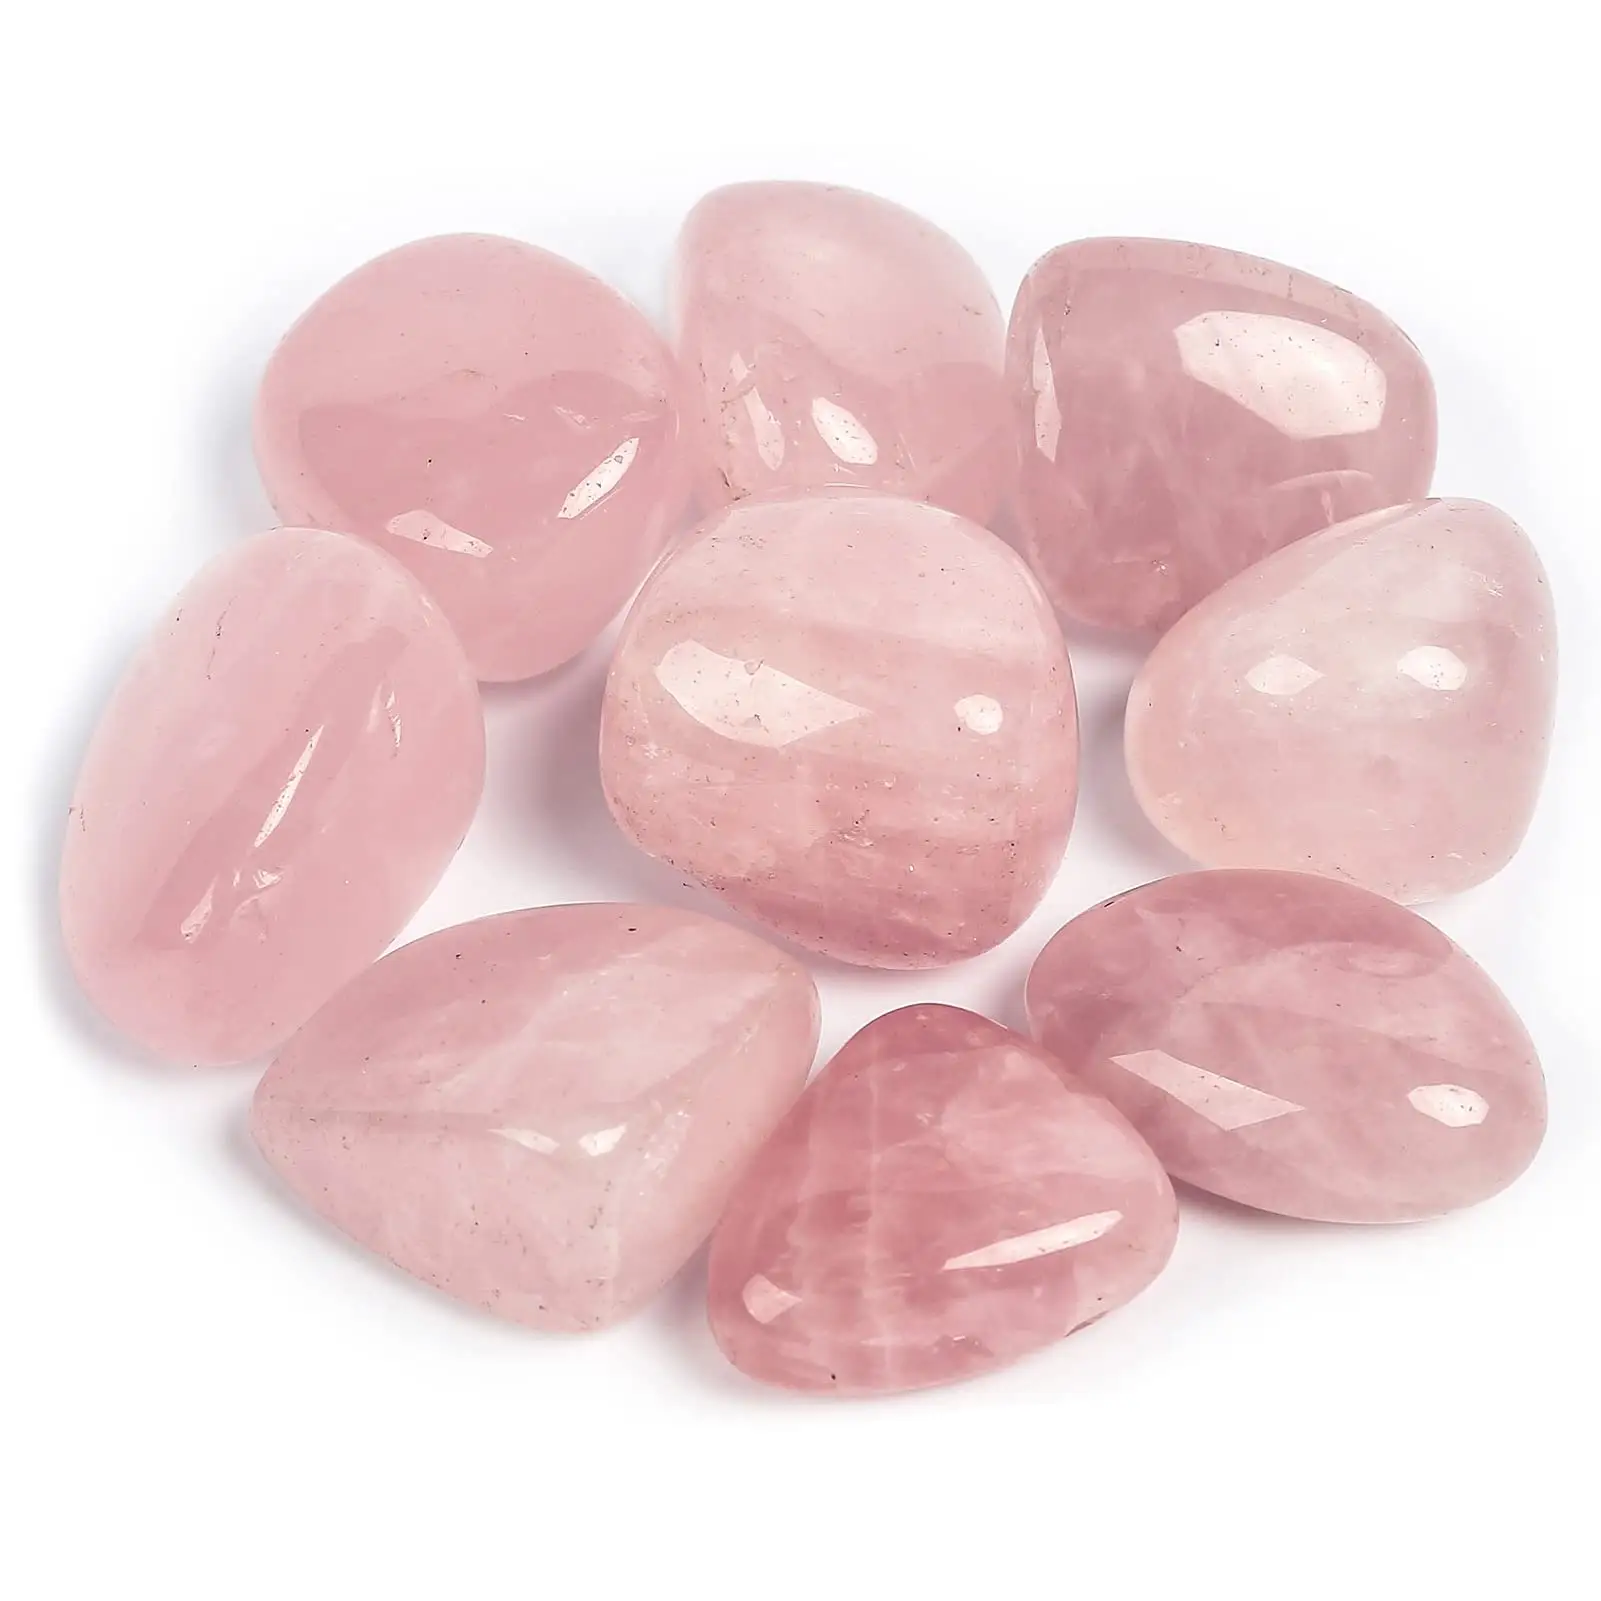 Quartzo rosa caído pedras atacado para fazer personalizado caído pedra pulseira cristal cair pedras atacado cristais cura